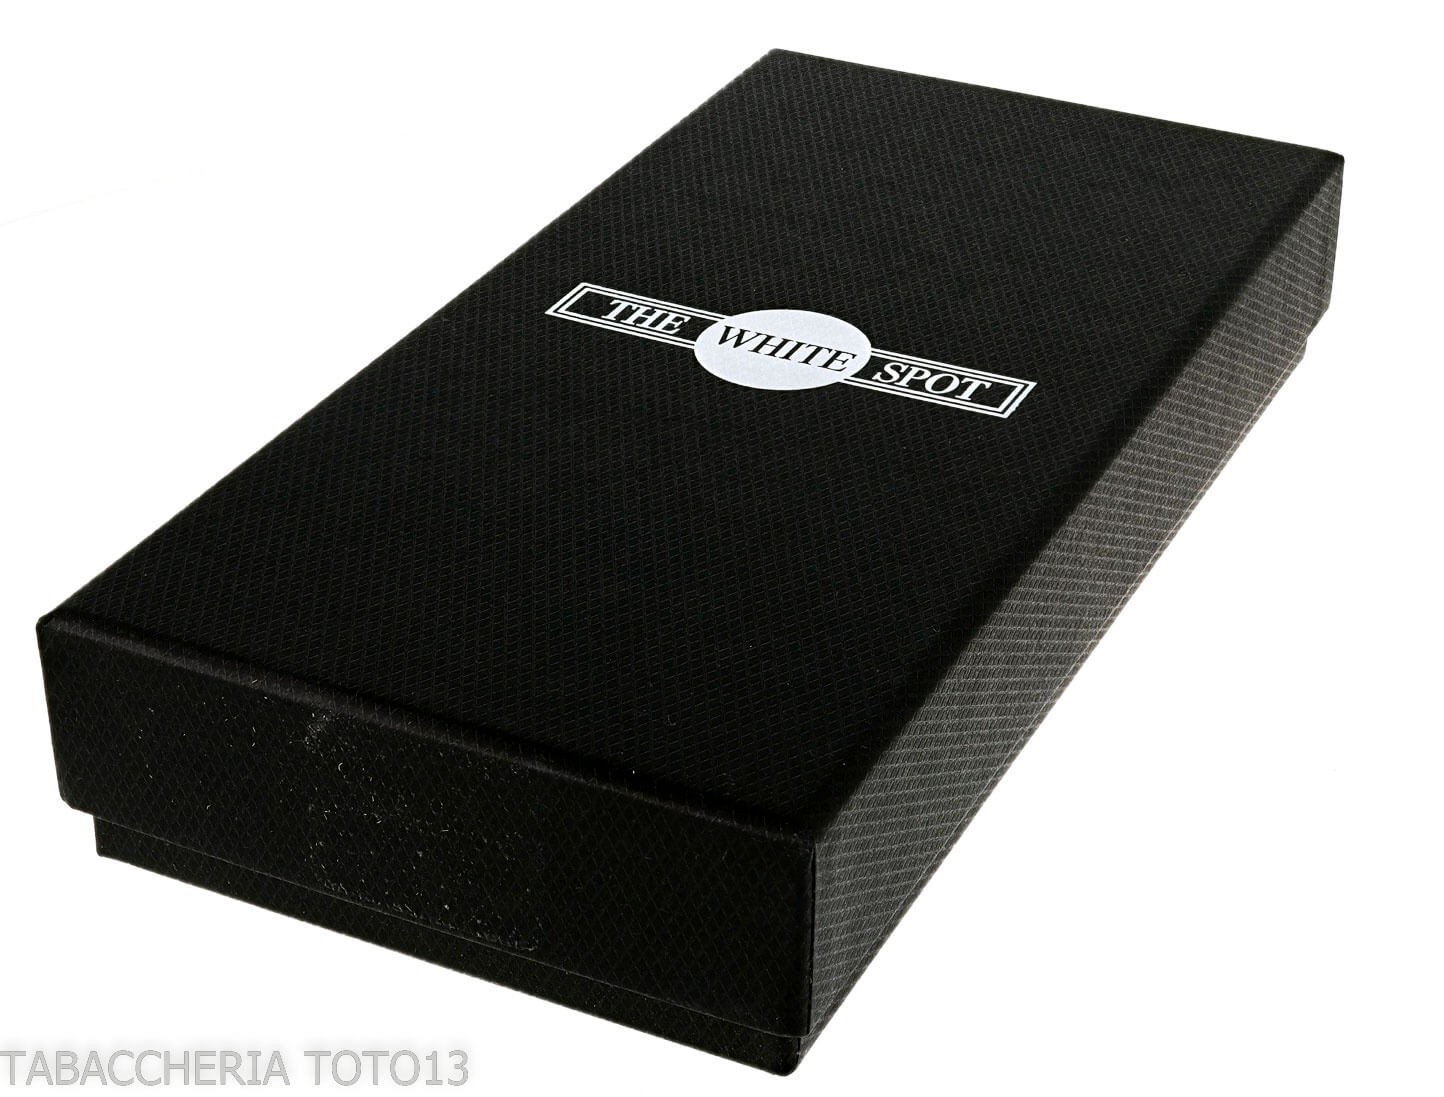 LUBINSKI Humidor Box Luxury Light Metal Fit 5 Cigars Case Portable Portect  Cigar Humidor Storage Tool With Gift Box